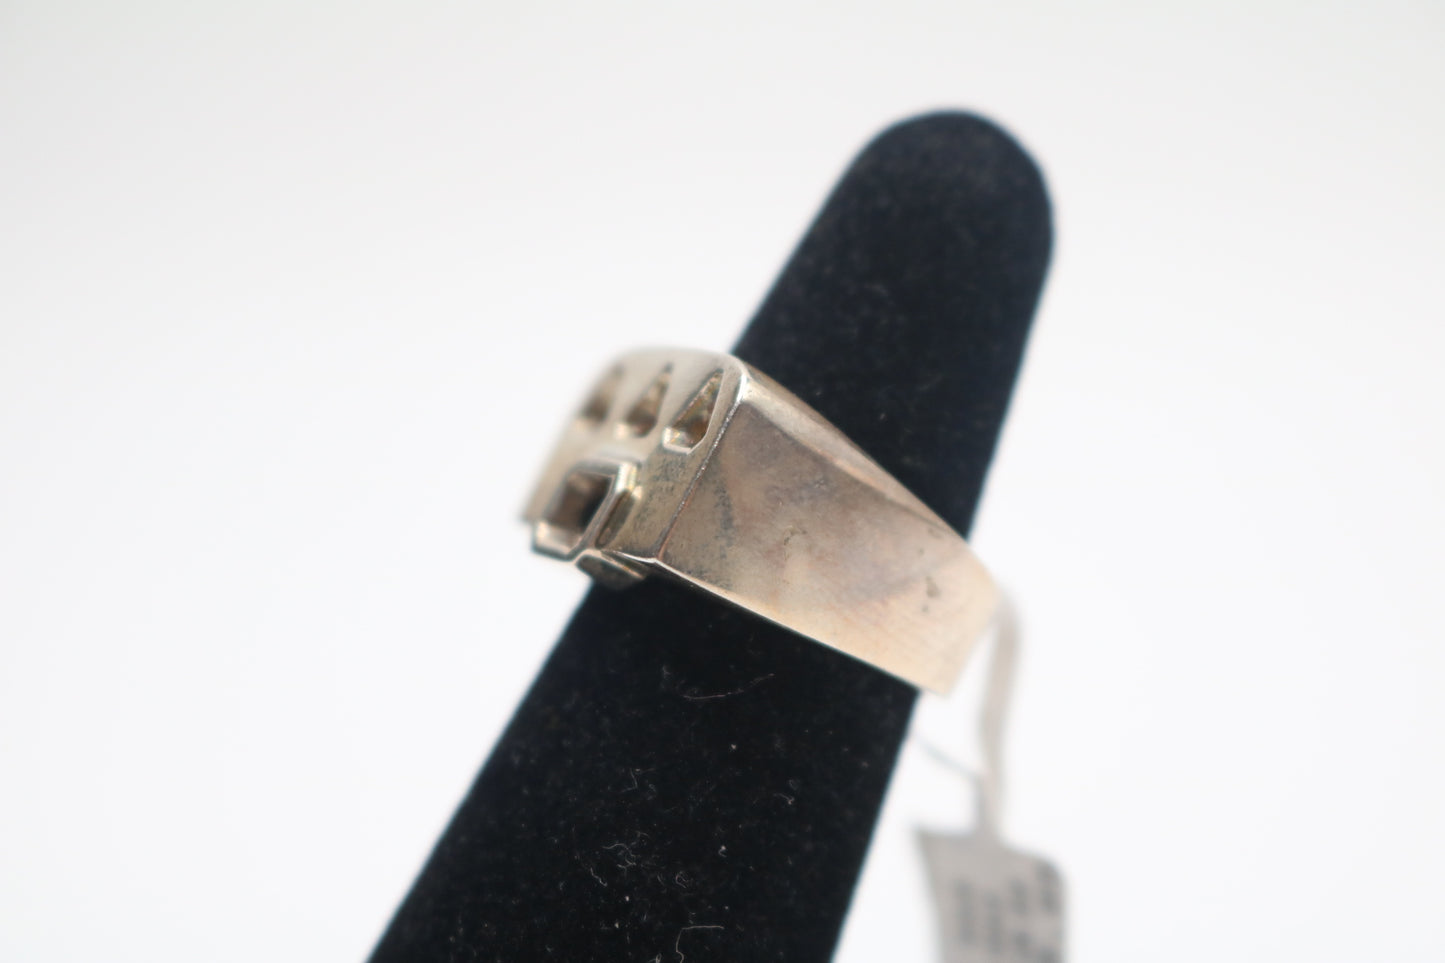 Sterling Silver Fancy Ring (Size 6)